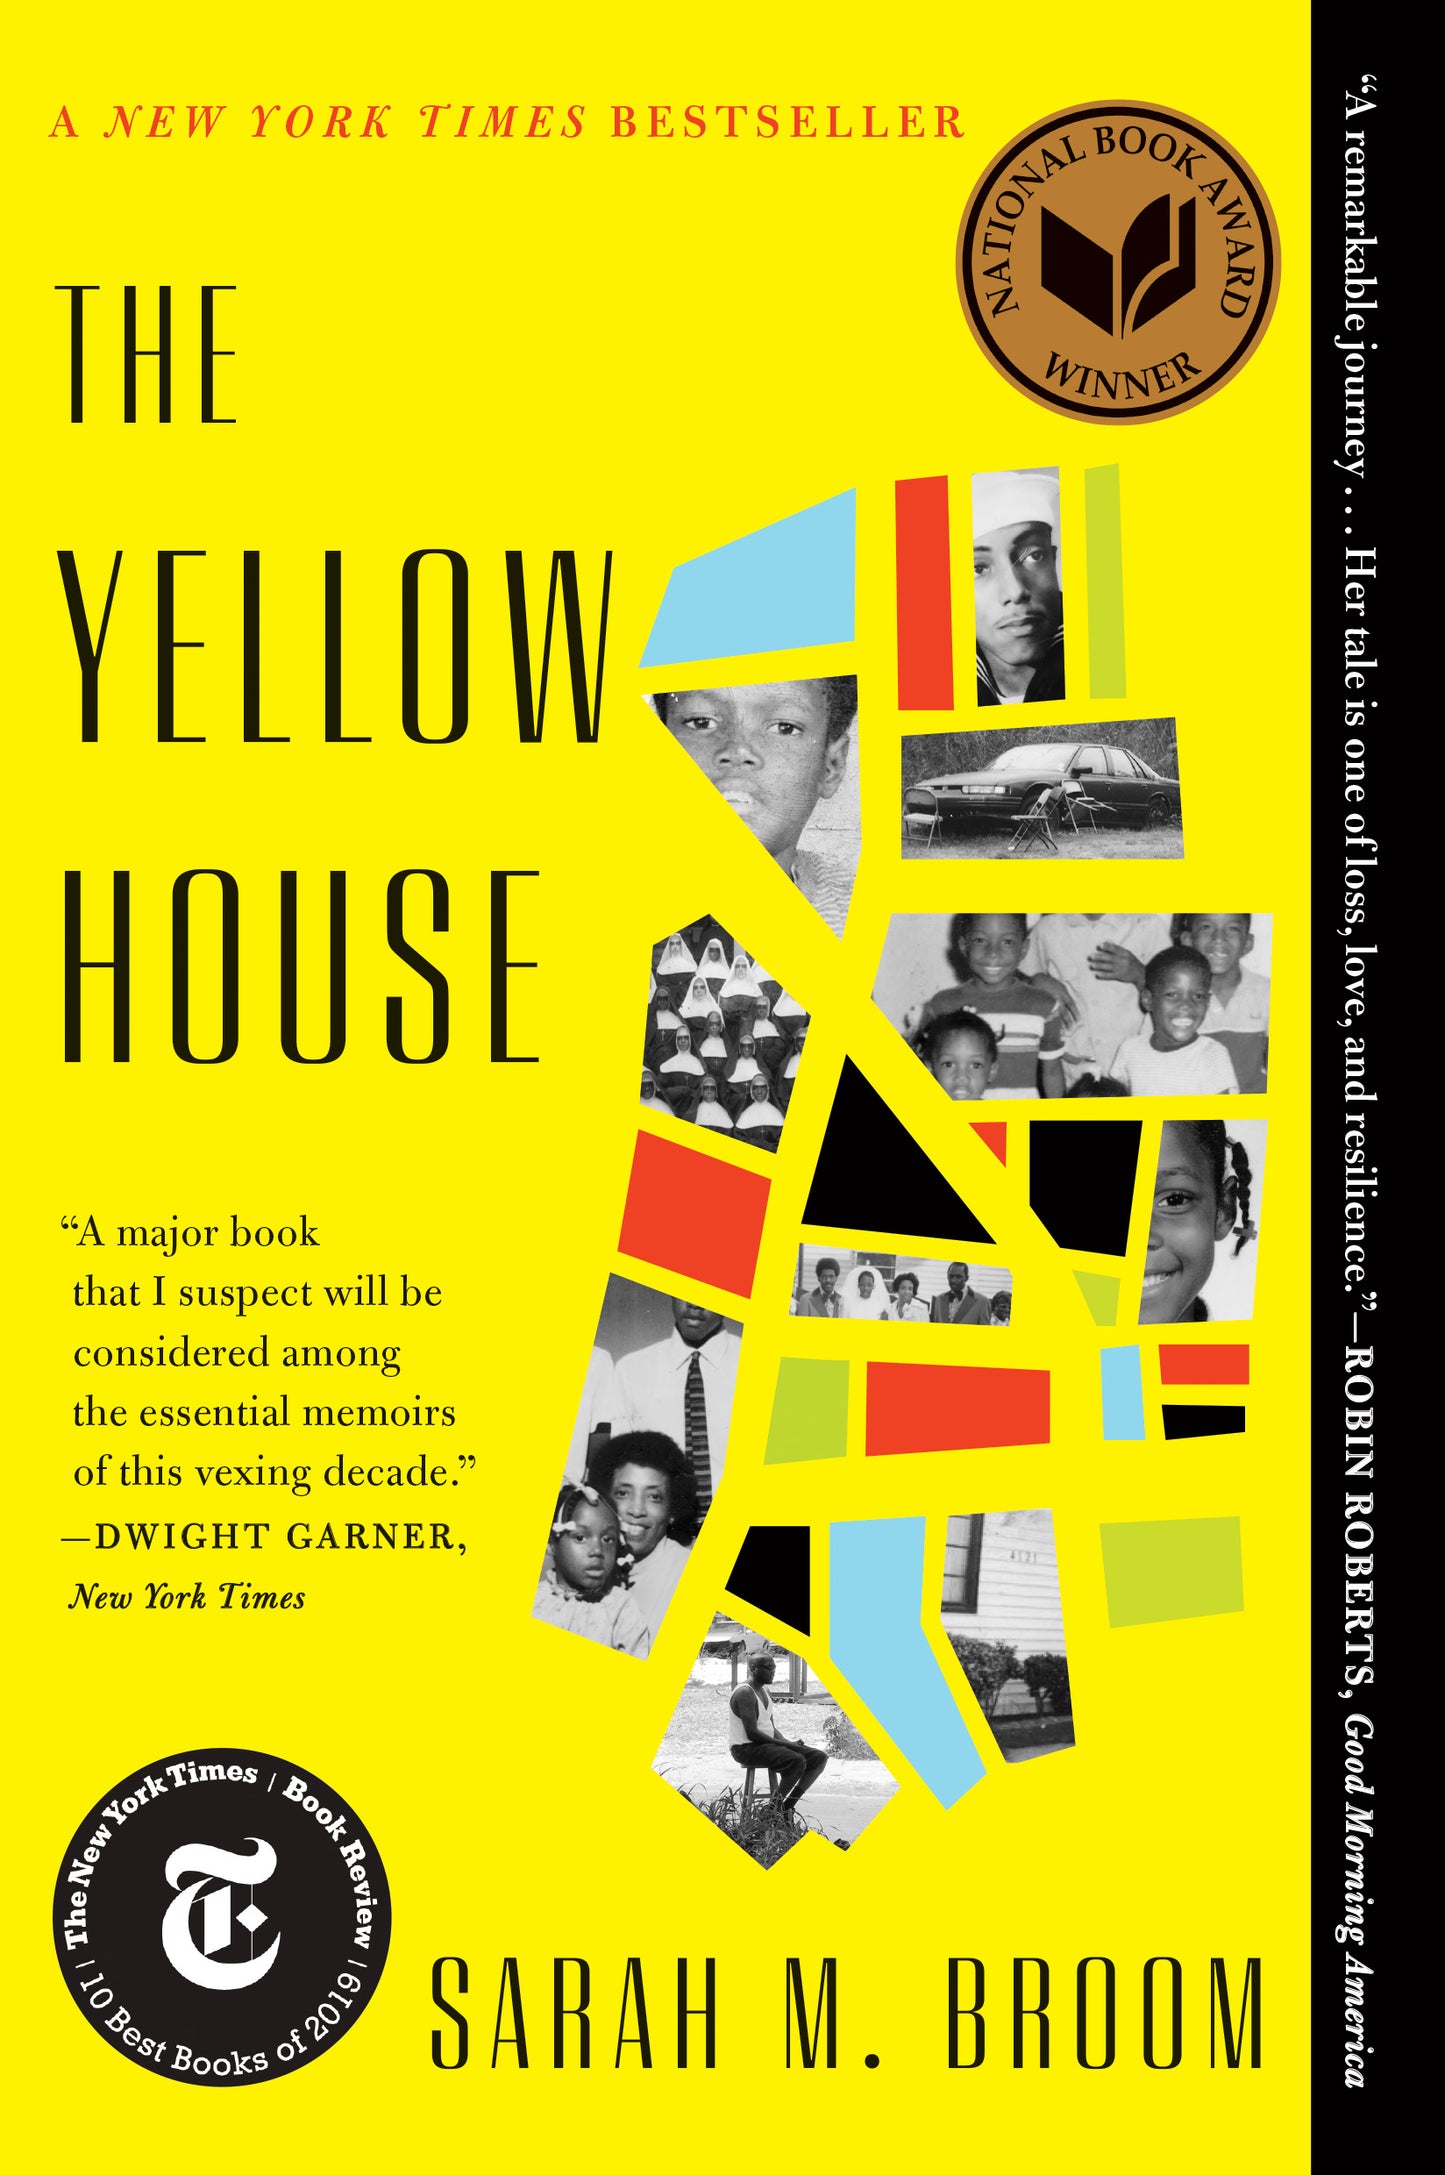 The Yellow House: A Memoir